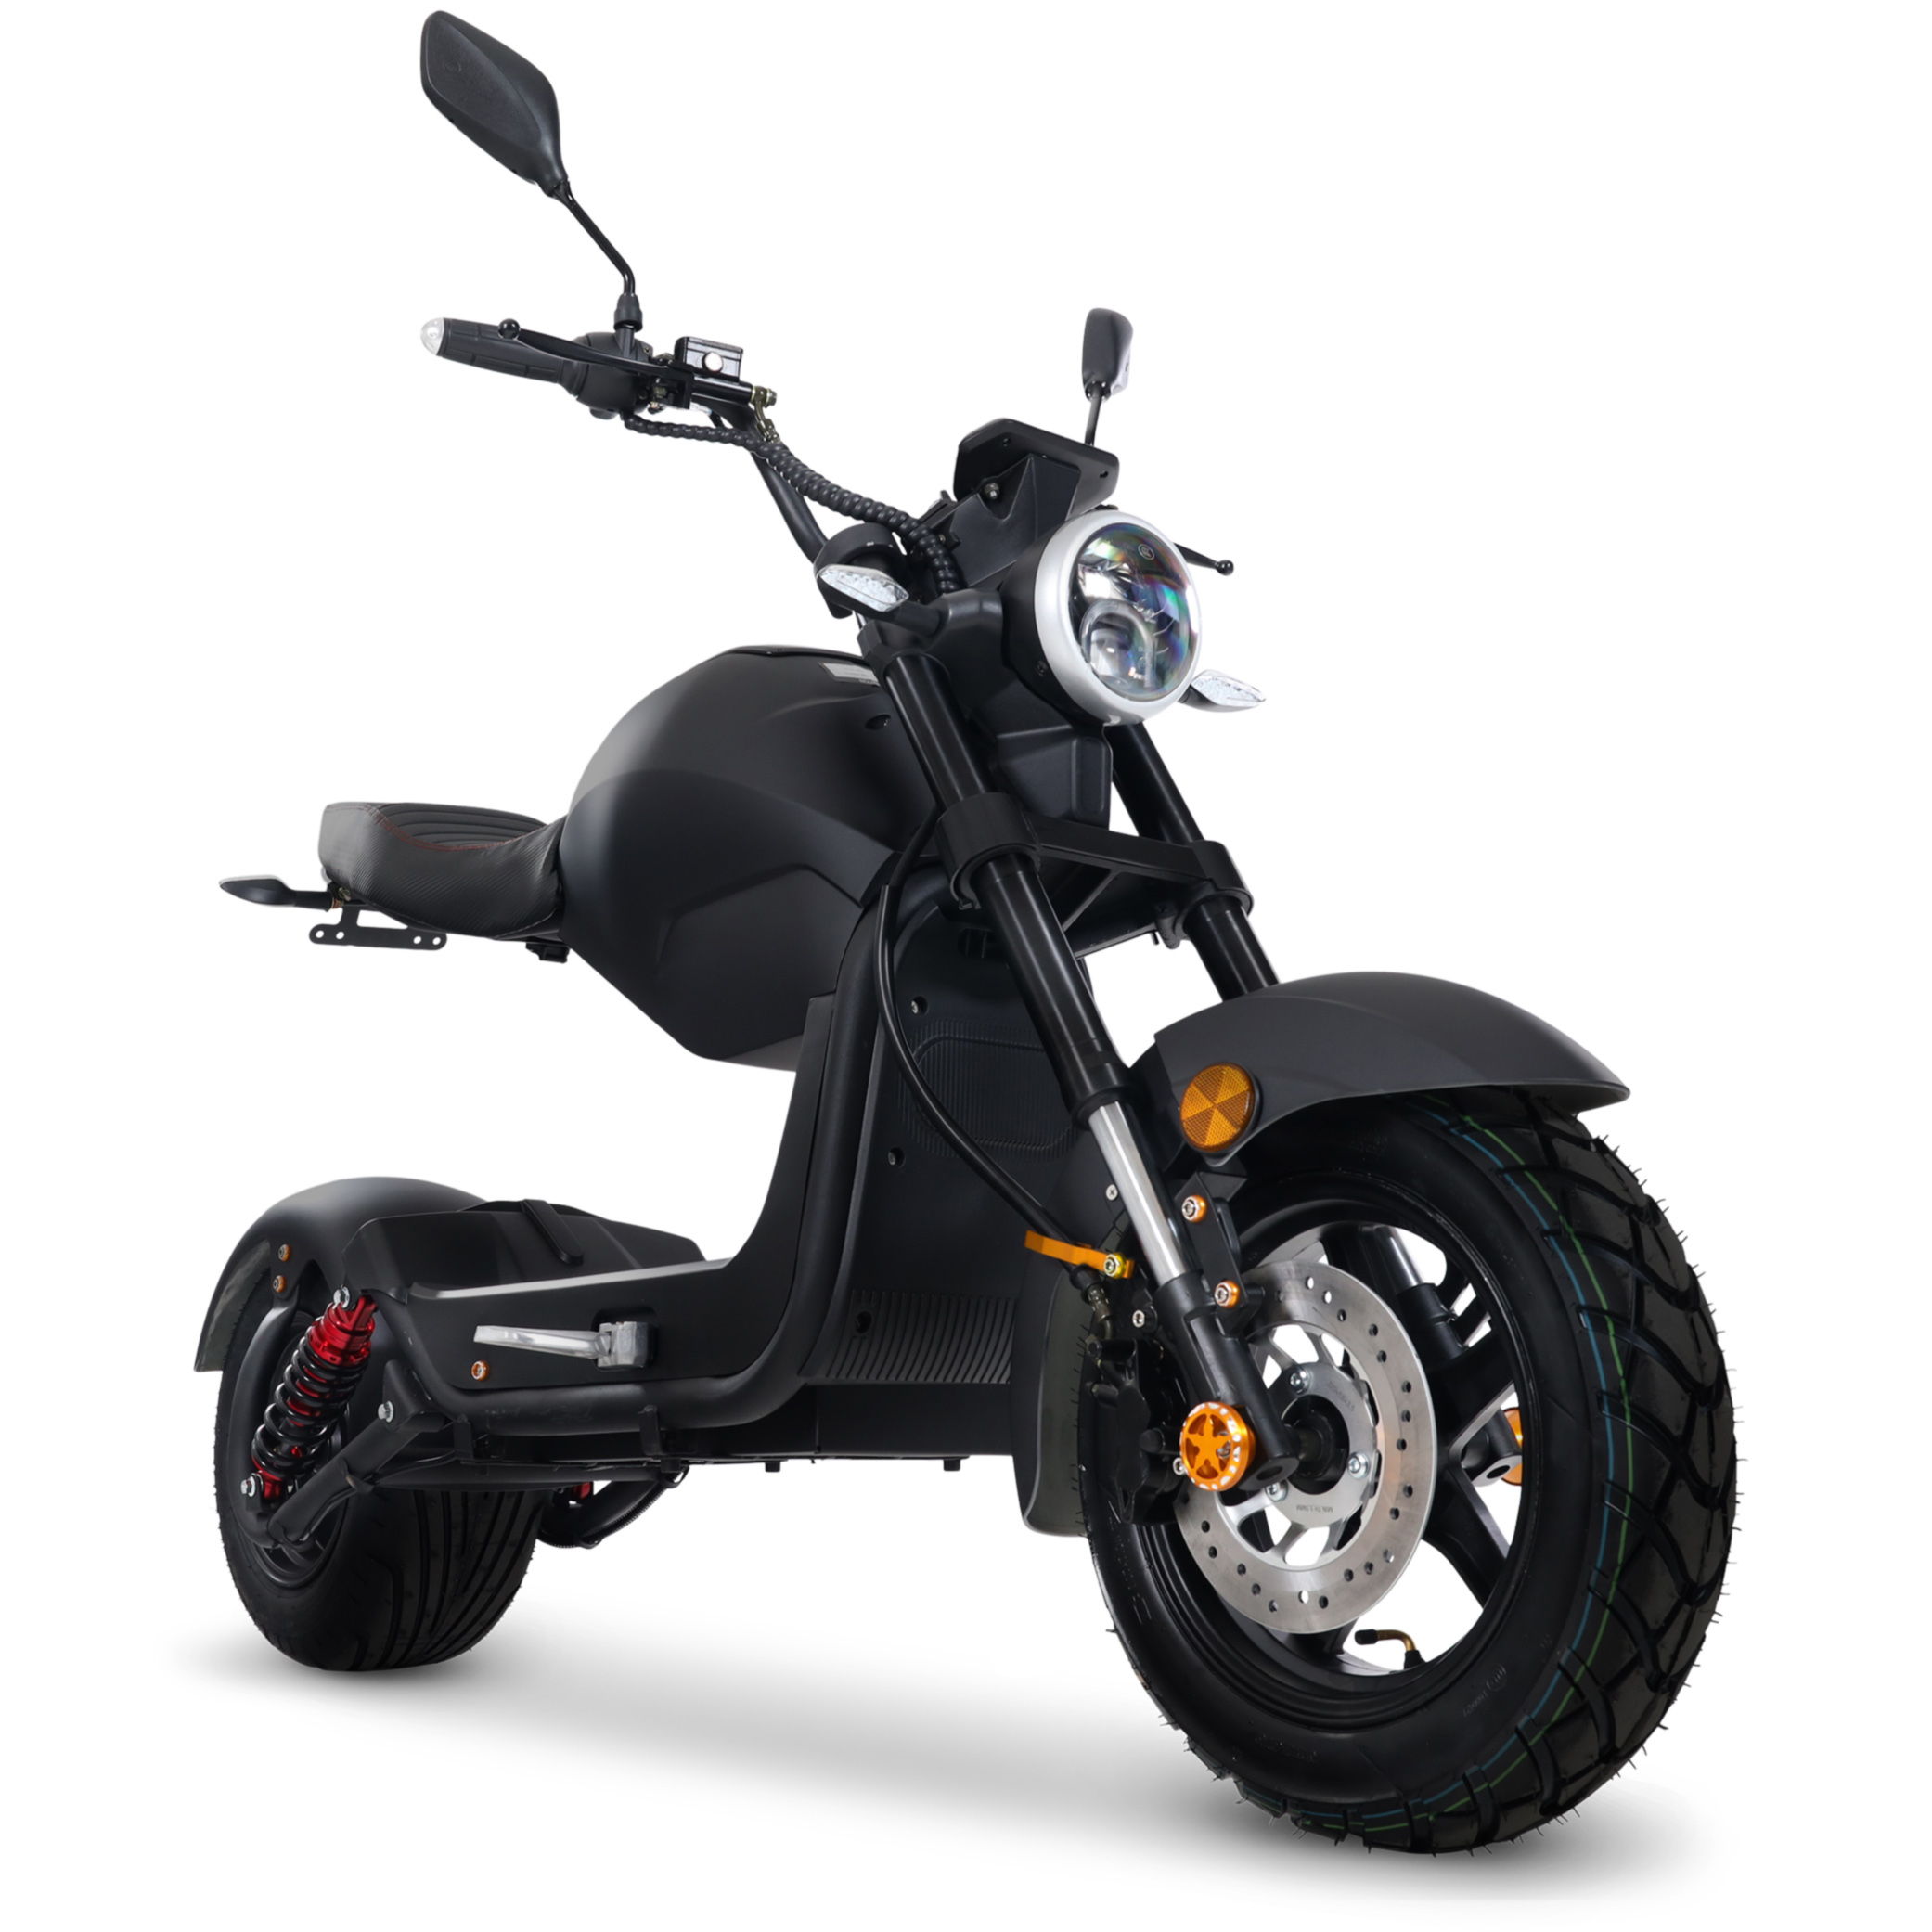 Fatscooter 2000W | Trafikgodkänd moped klass 1 | LG litiumbatteri